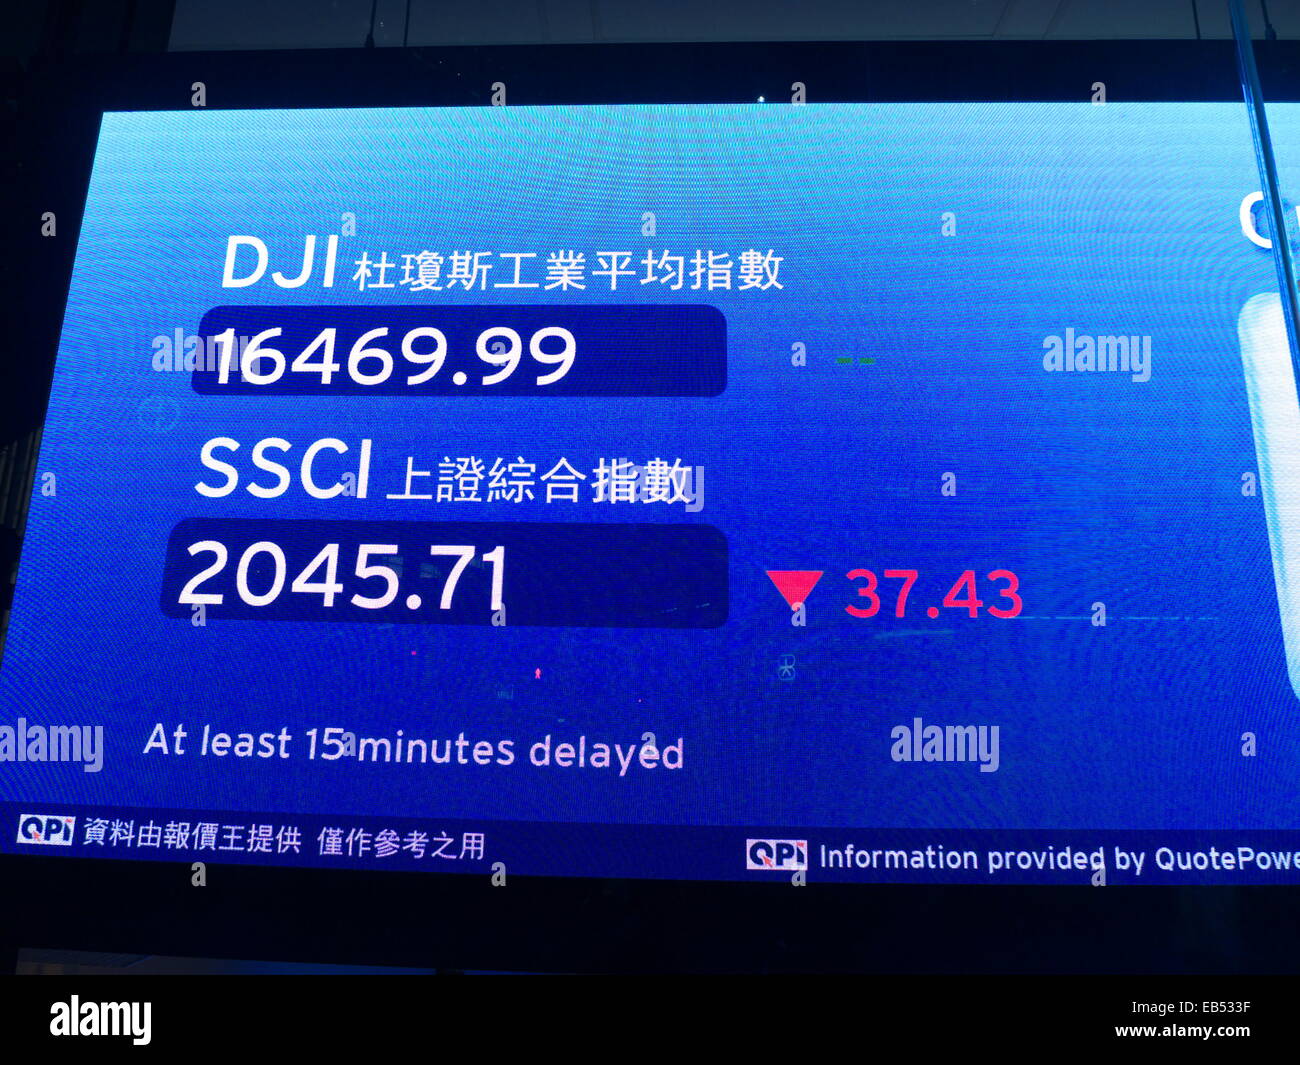 China Hong Kong DJI and SSCI Stock index Stock Photo - Alamy